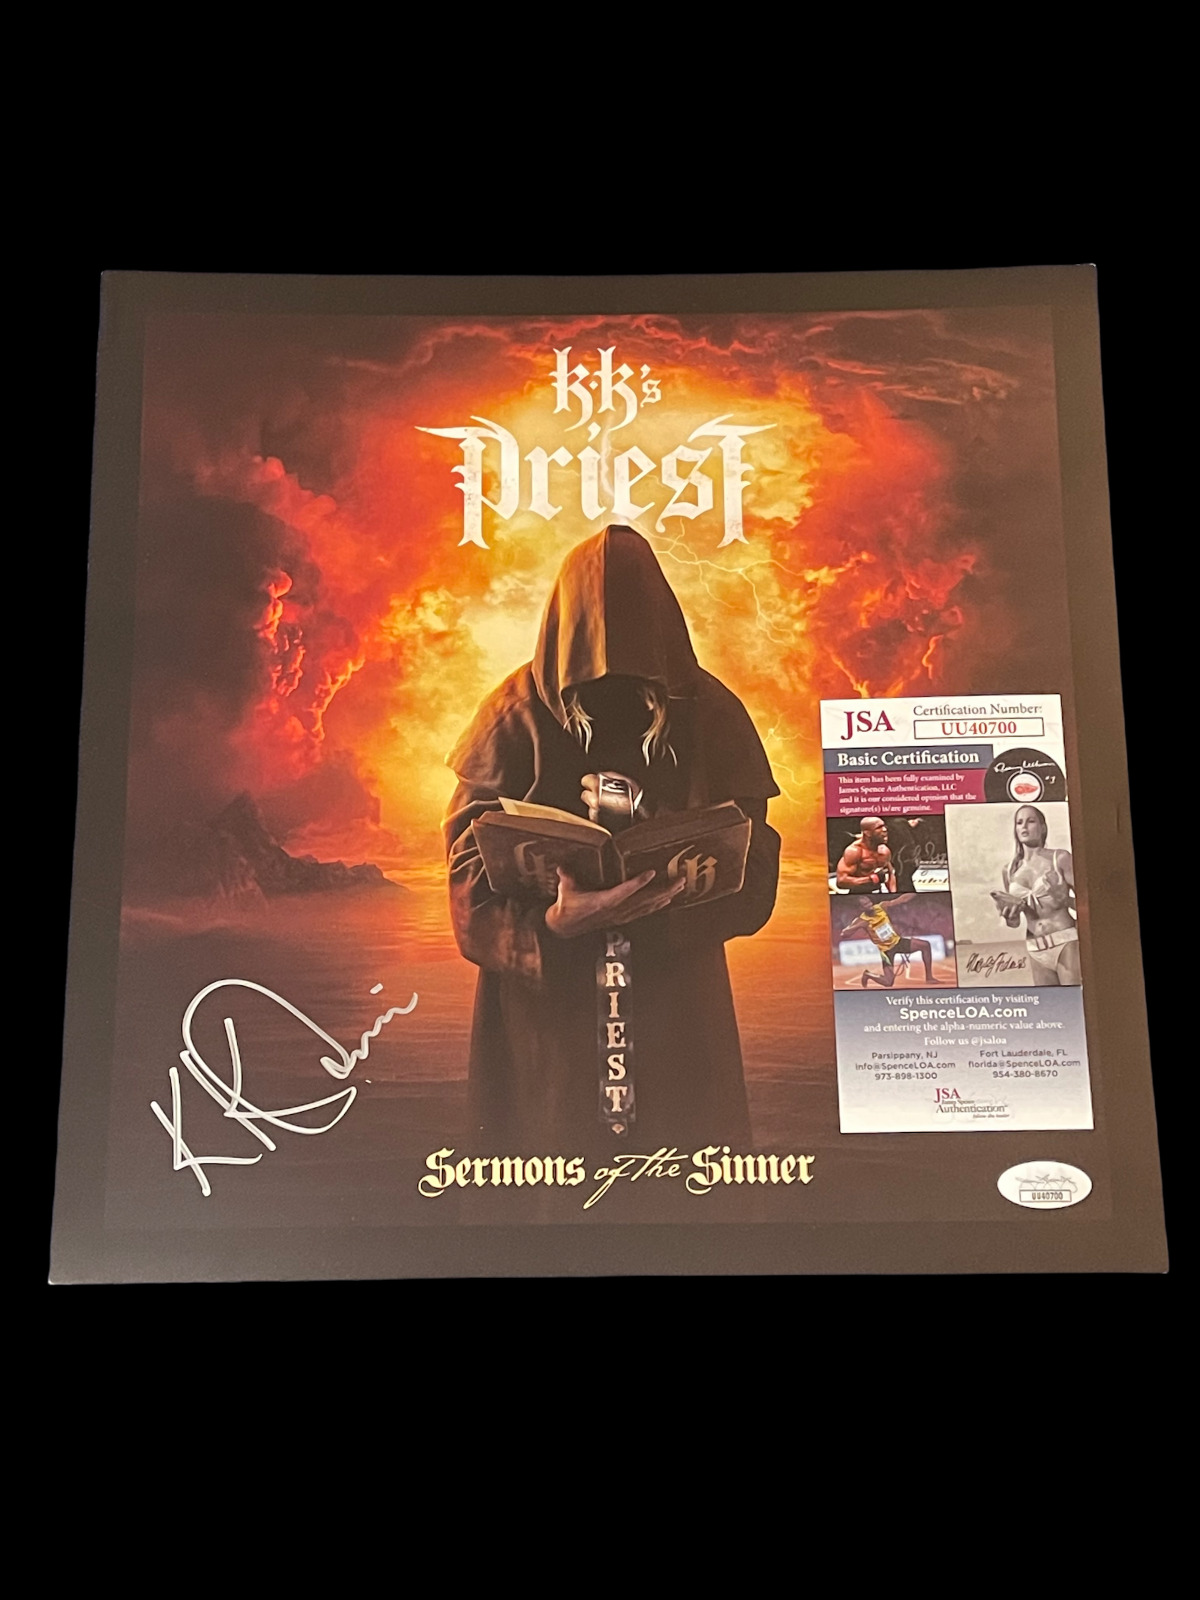 K. K. Downing KK's Priest Judas Priest Signed Autograph Record 12x12 Photo JSA